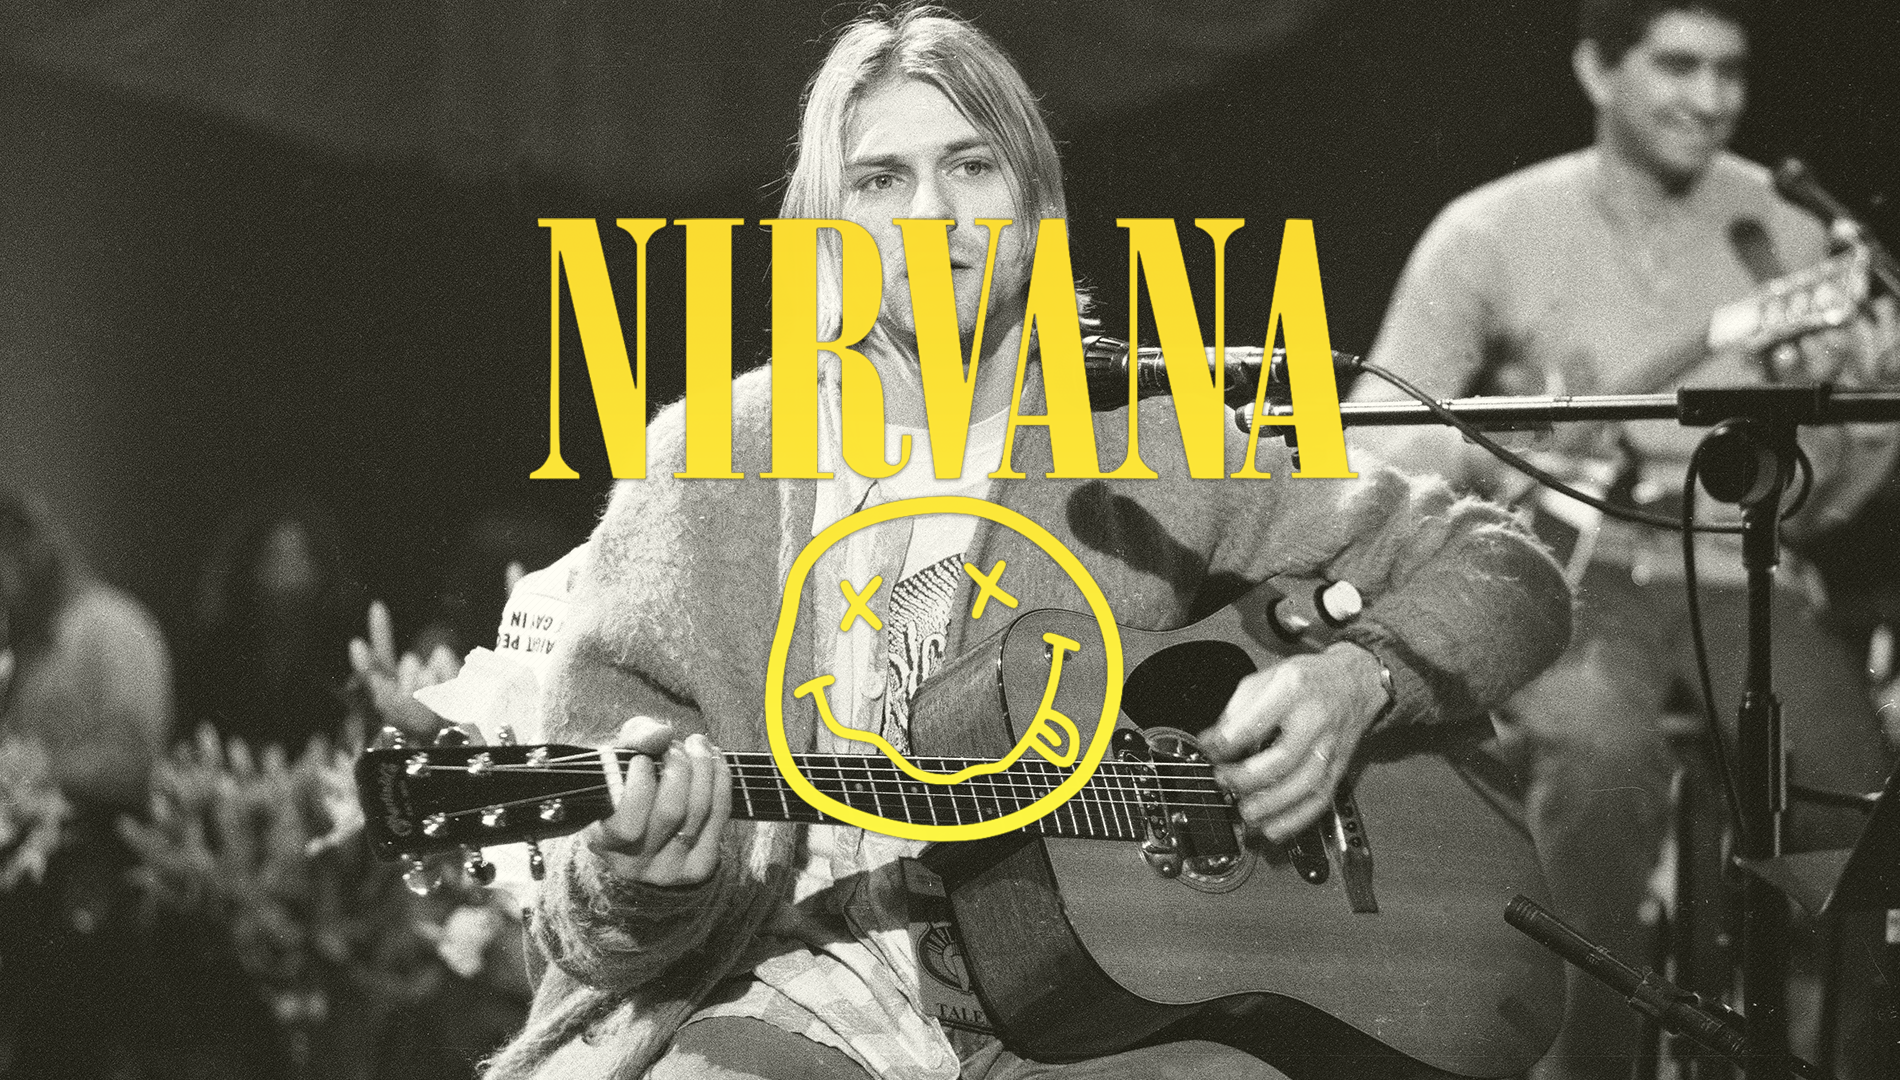 General 1900x1080 Nirvana grunge rocks Kurt Cobain Pat Smear logo music band